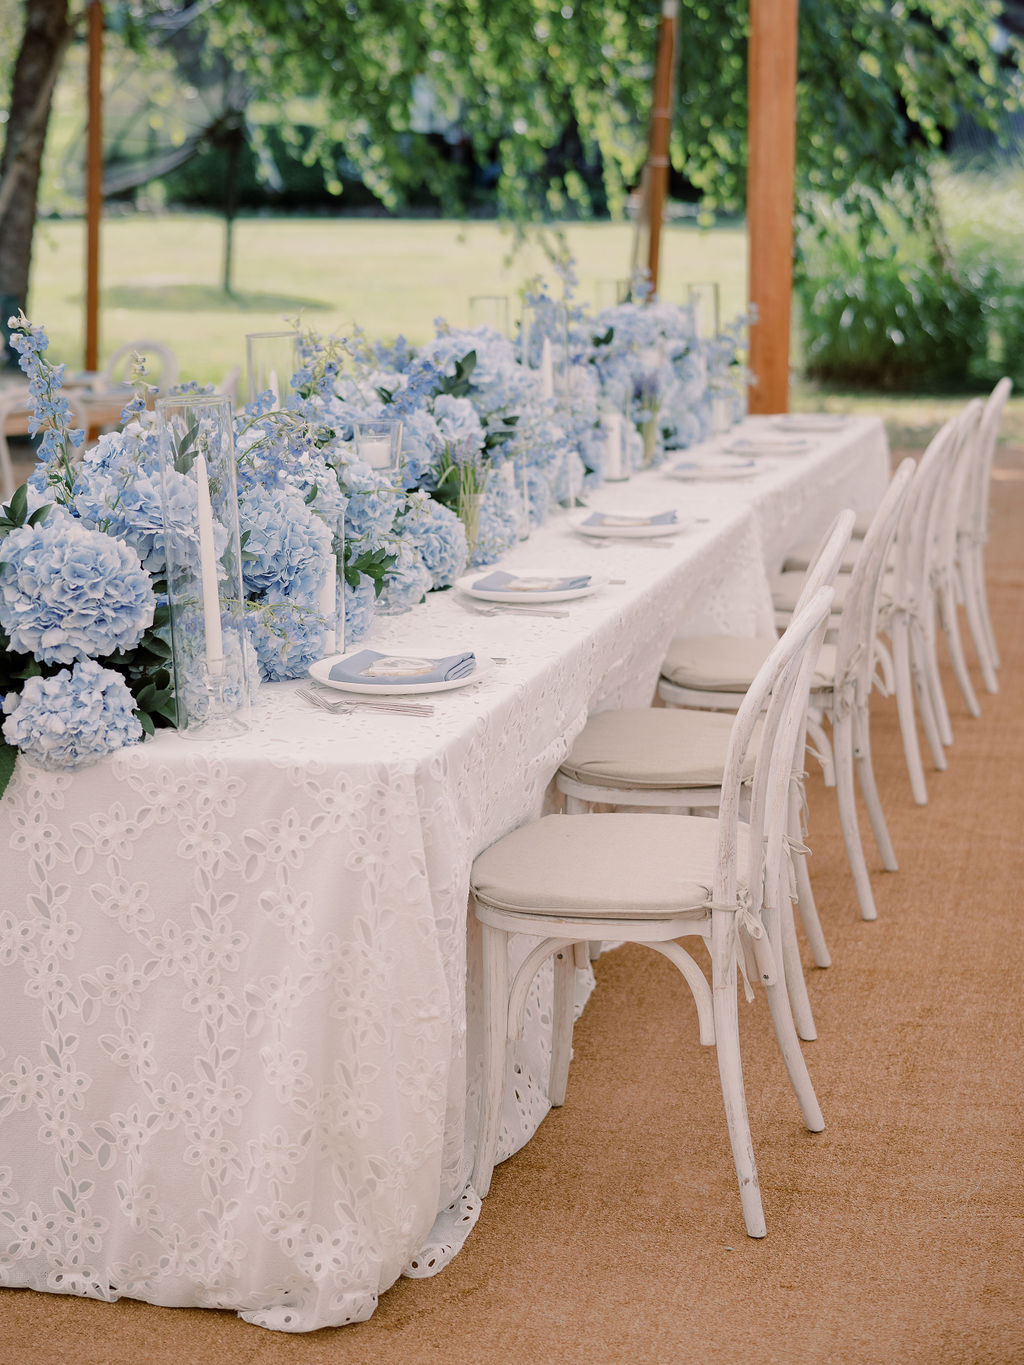 Blue Hydrangea runner on wedding reception table. Wedding done by HeatherLily.